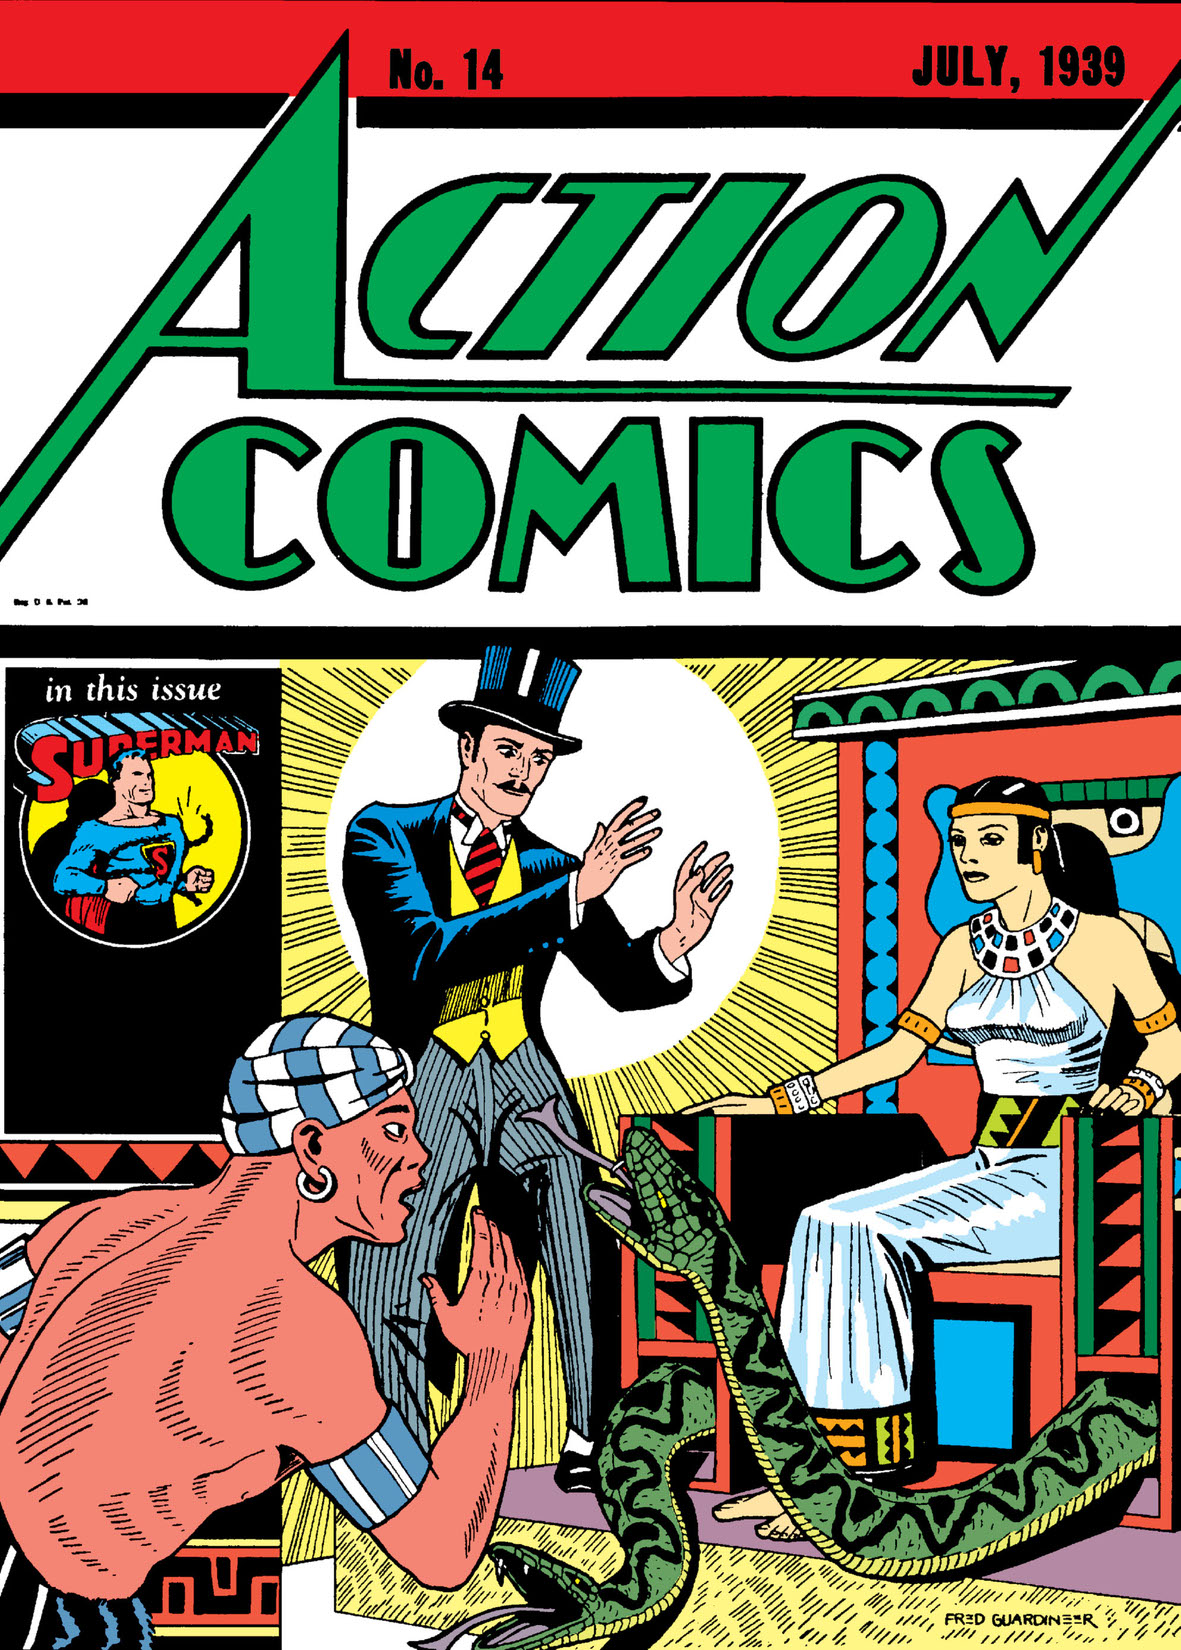 Action Comics (1938-) #14 preview images